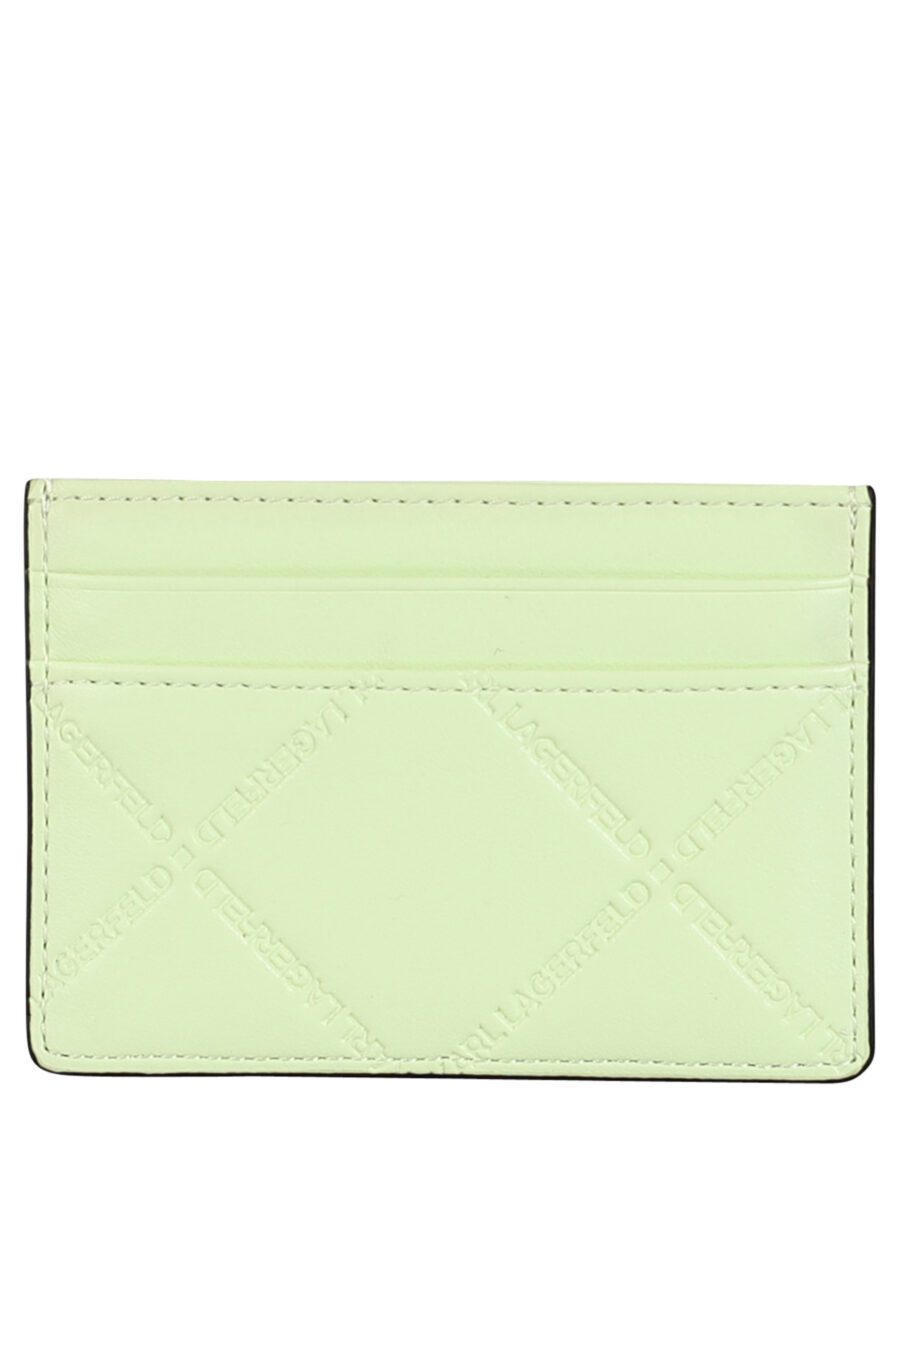 Green card holder with black logo - 8720744104551 2